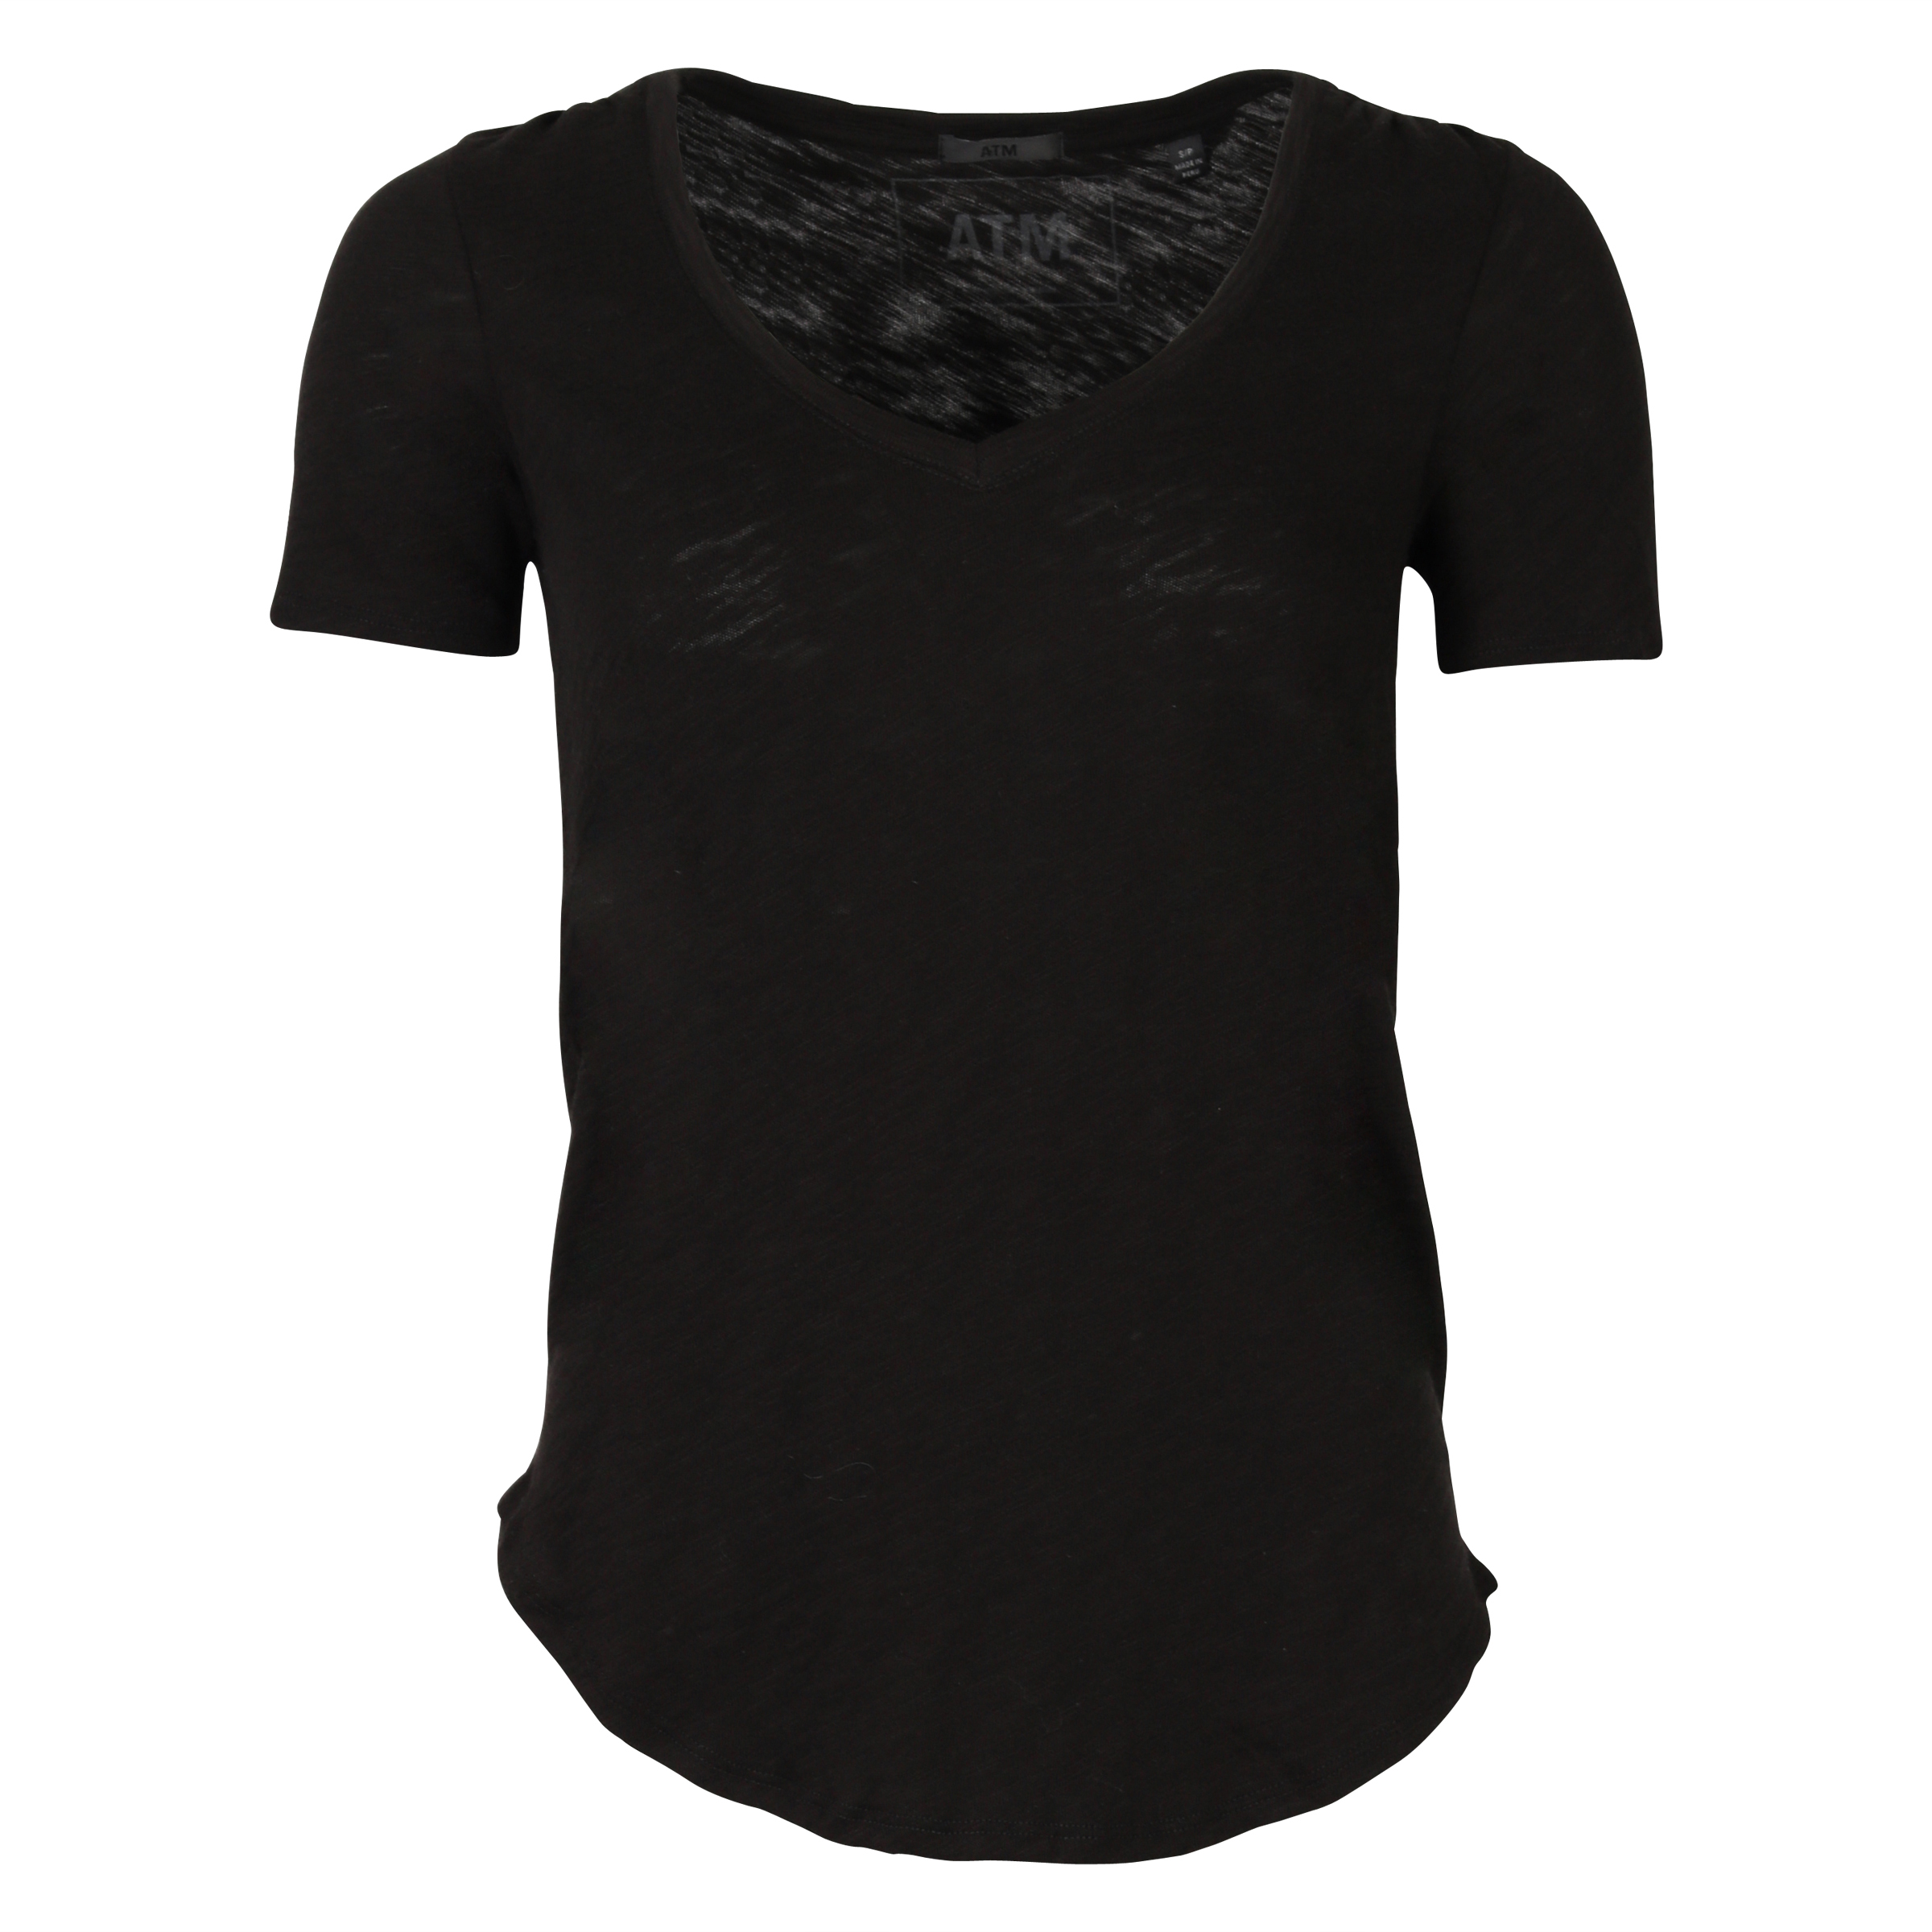 ATM V-Neck Slub Jersey T-Shirt Black